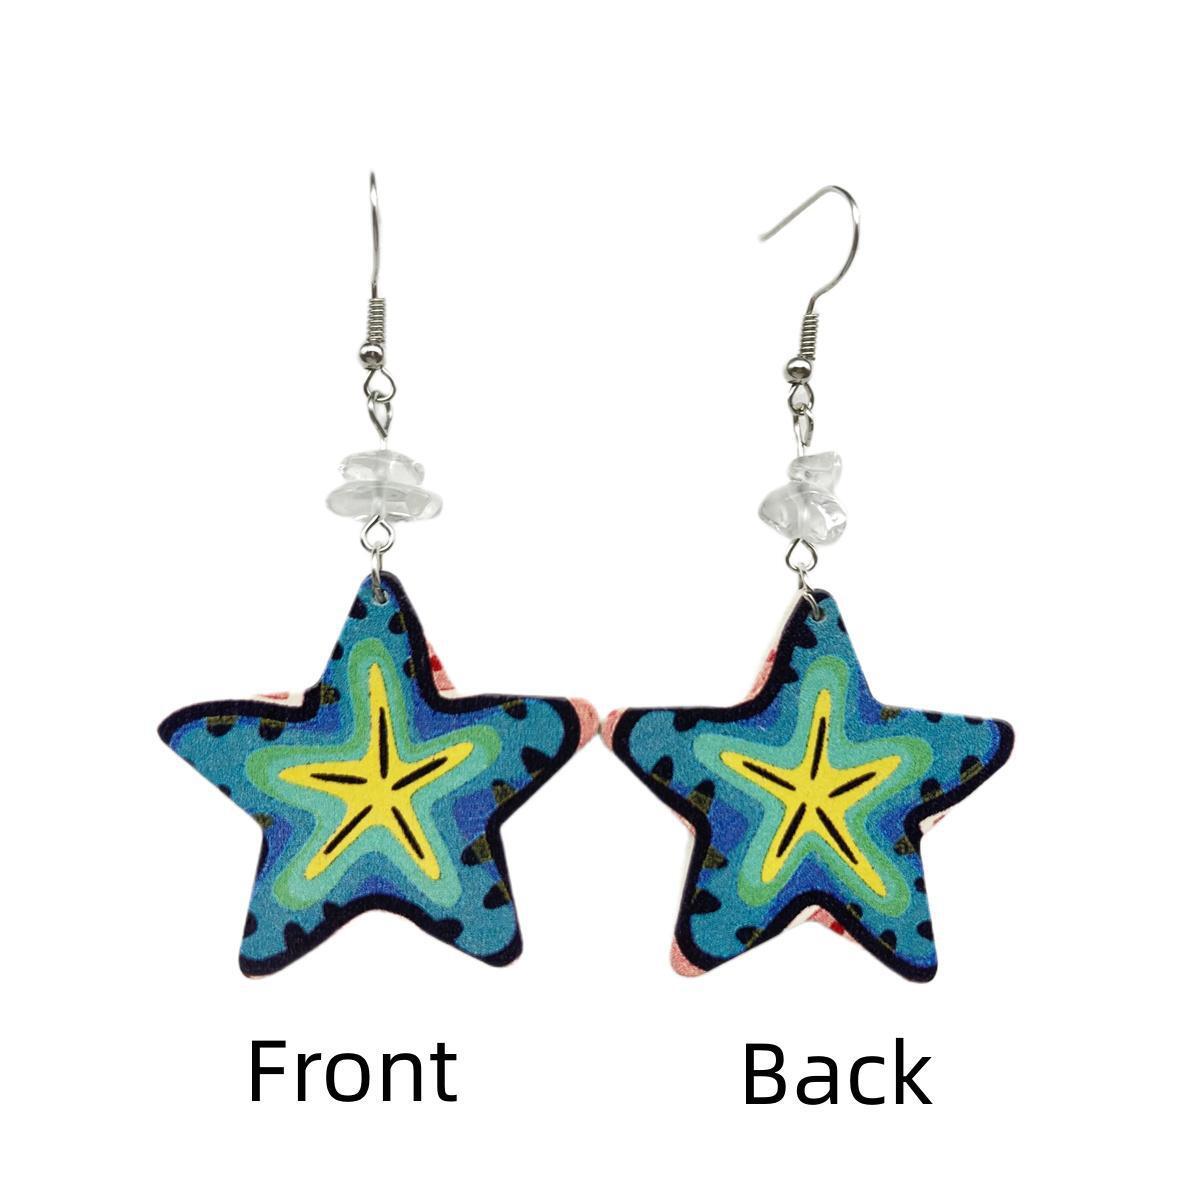 Accessories Five-pointed Star Wind Personalized Eardrops Earrings